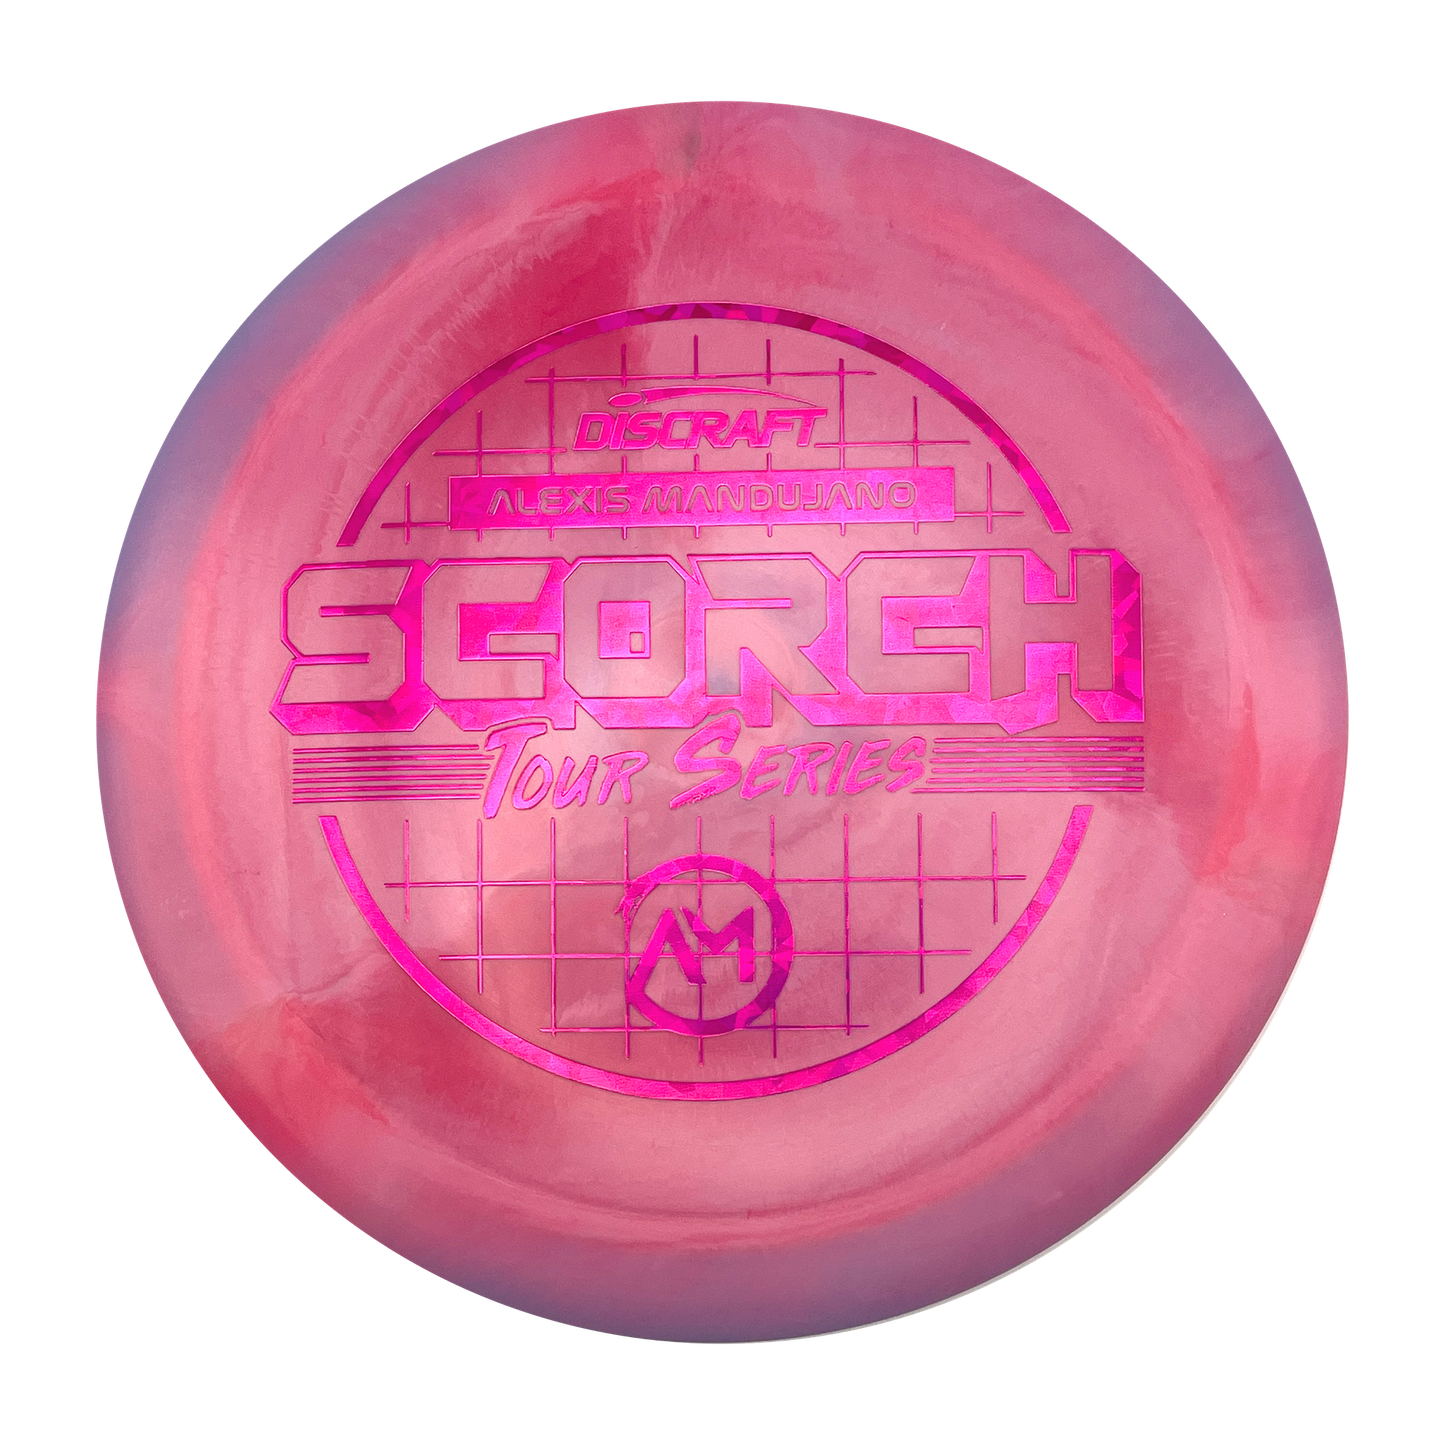 Discraft Scorch - ESP Line - Swirly Pink